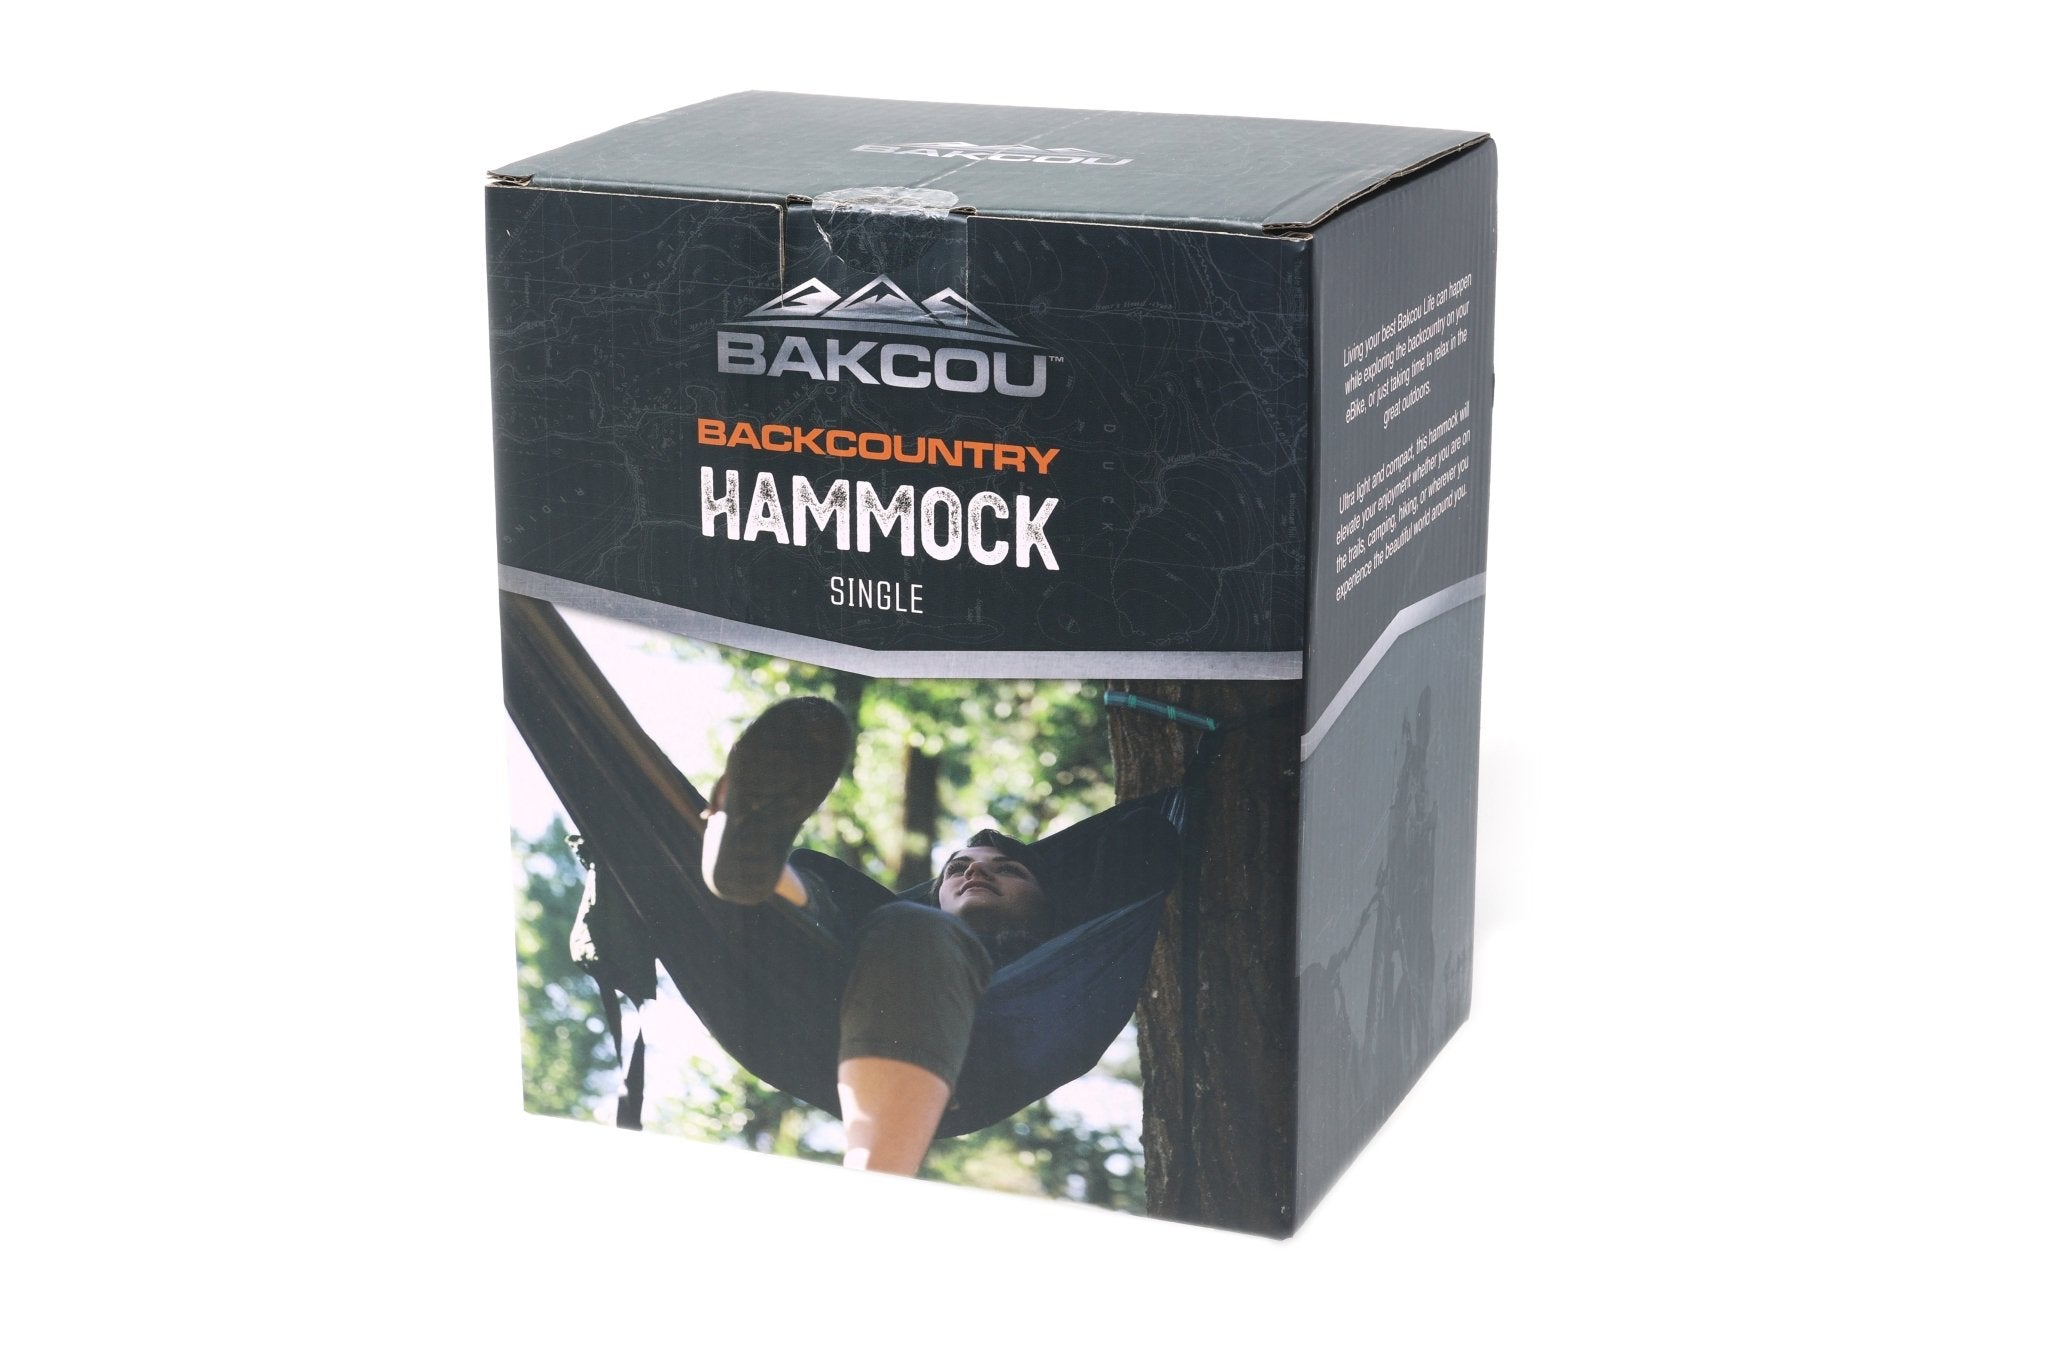 Bakcou Hammock - Bakcou